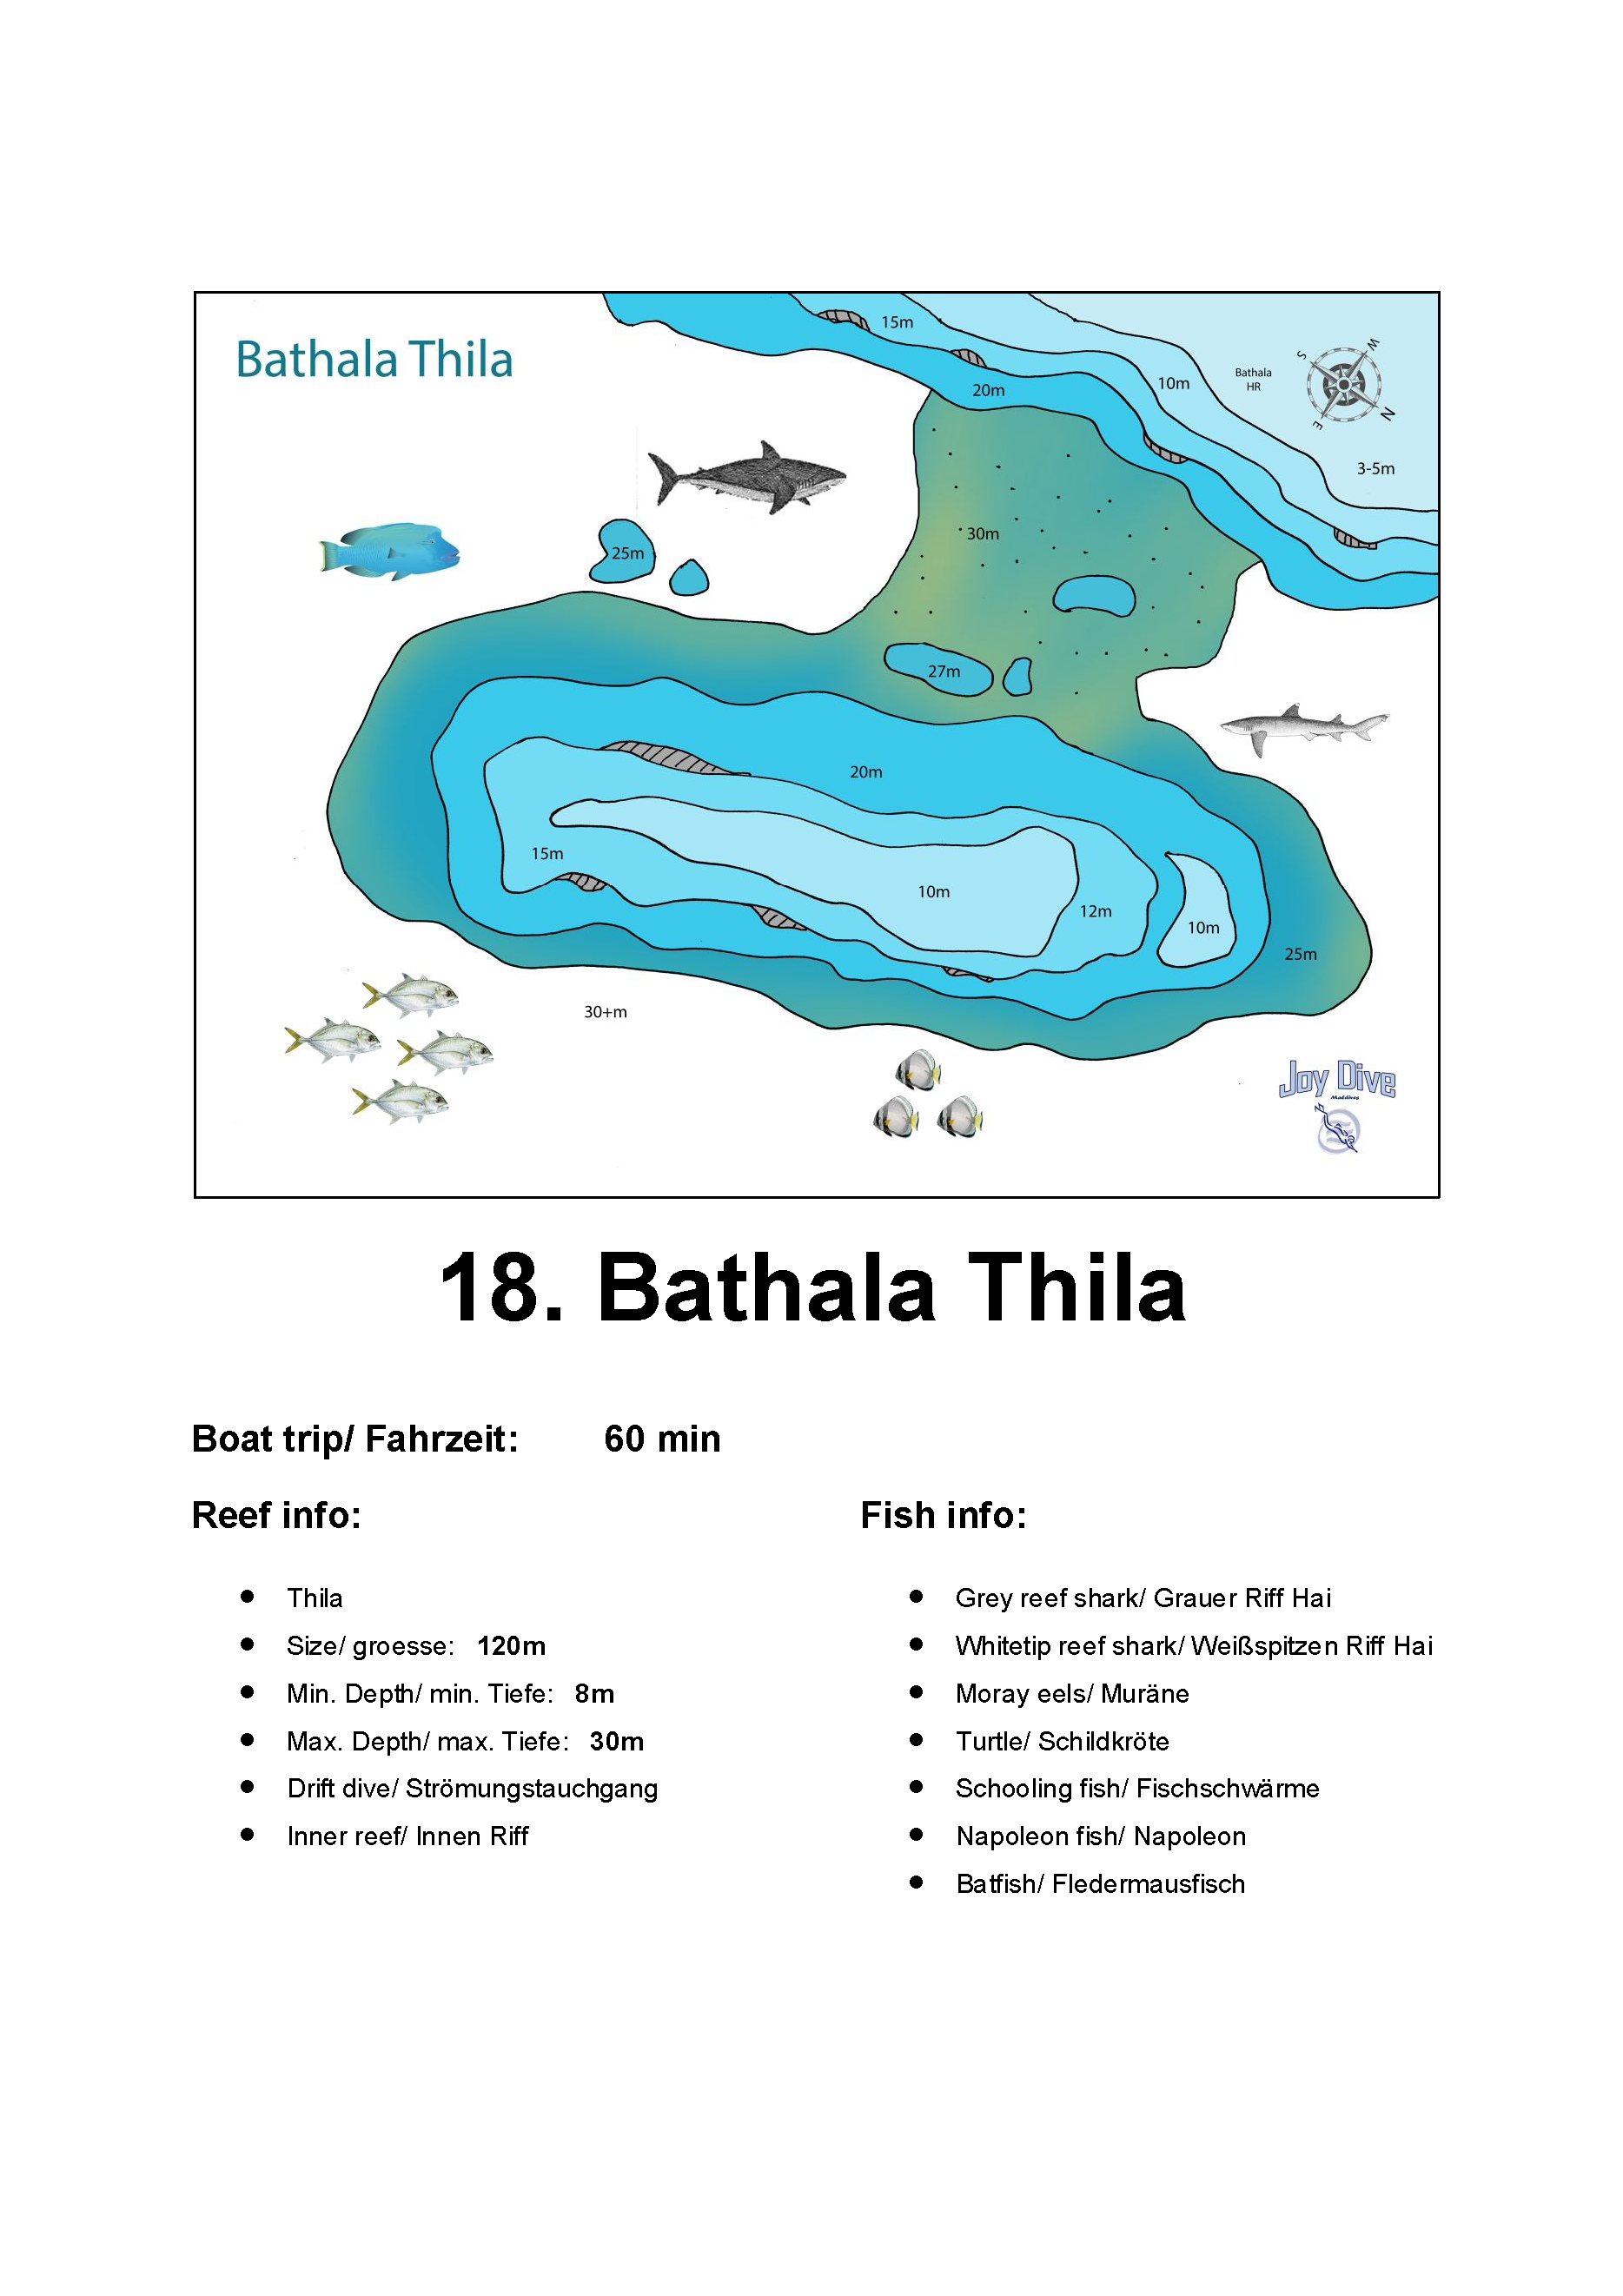 BathalaThila